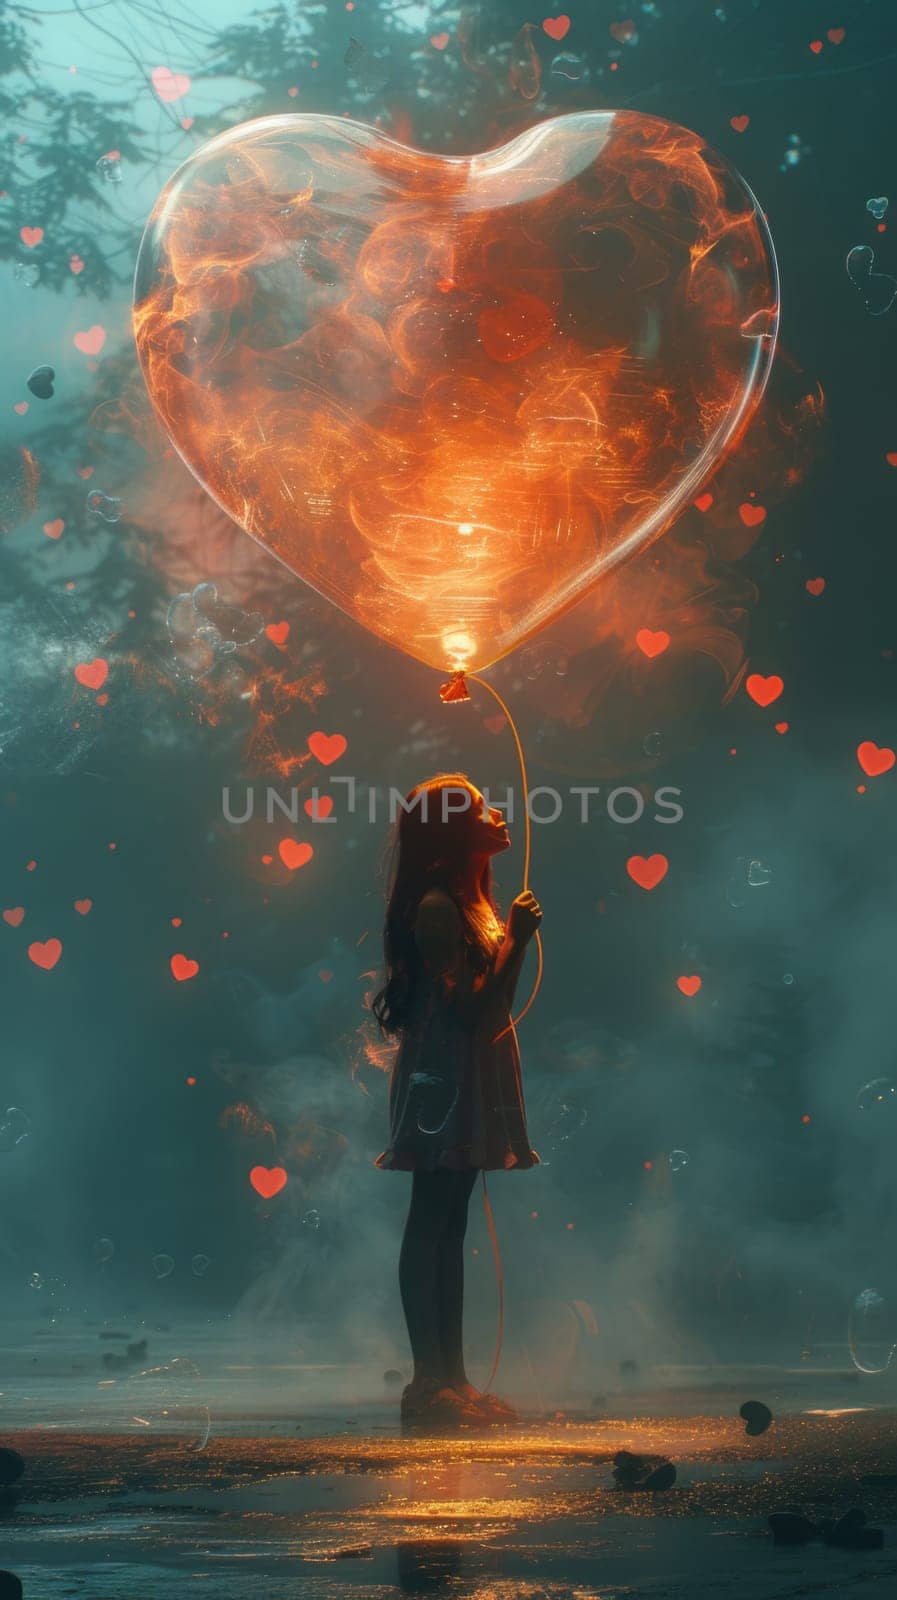 A girl joyfully holds a heart-shaped balloon high above her head.